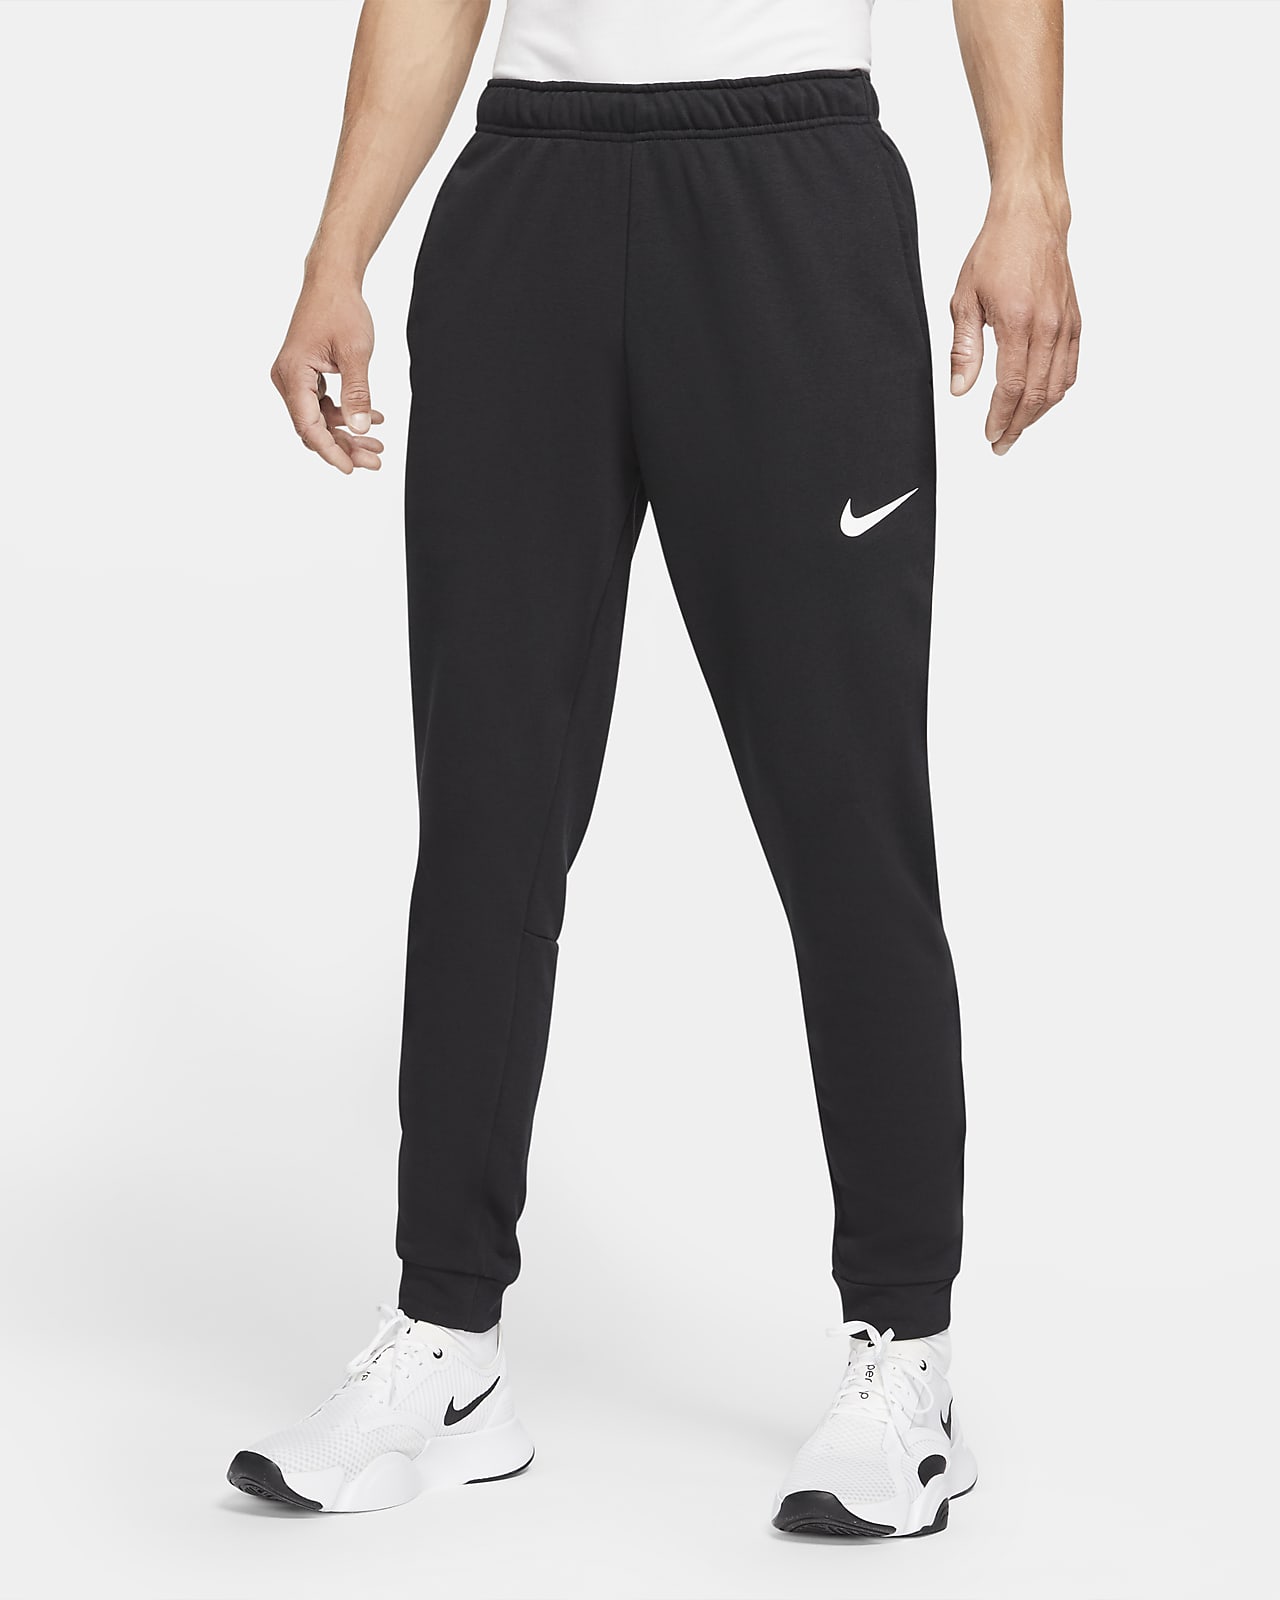 Nike Dry Pantalón Dri-FIT ceñido de tejido Fleece - Hombre